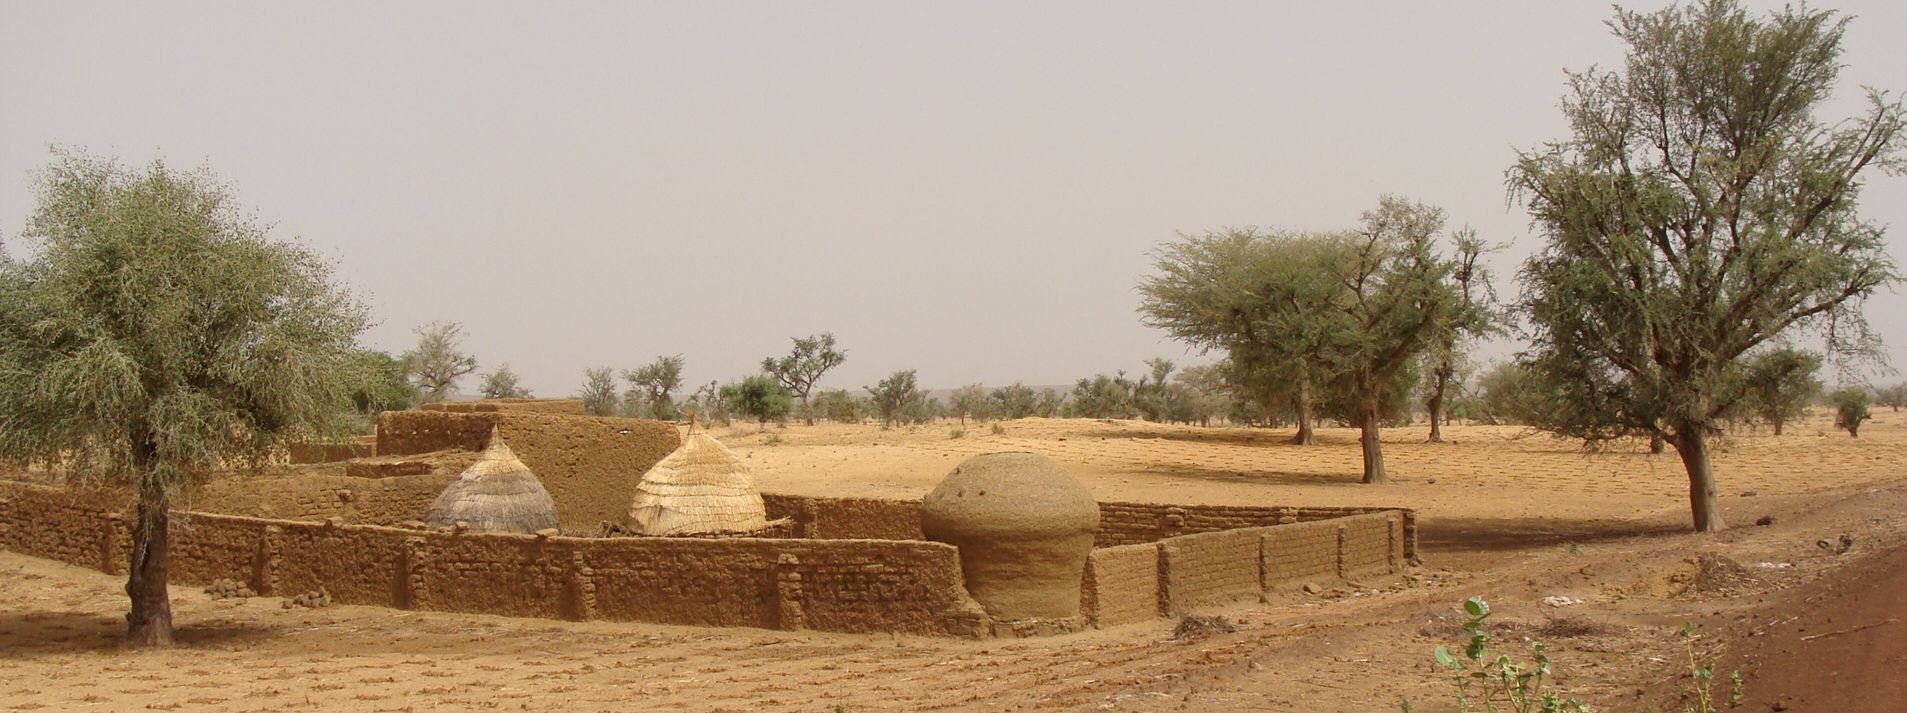 Foto: Overlevingslandbouw in Niger.